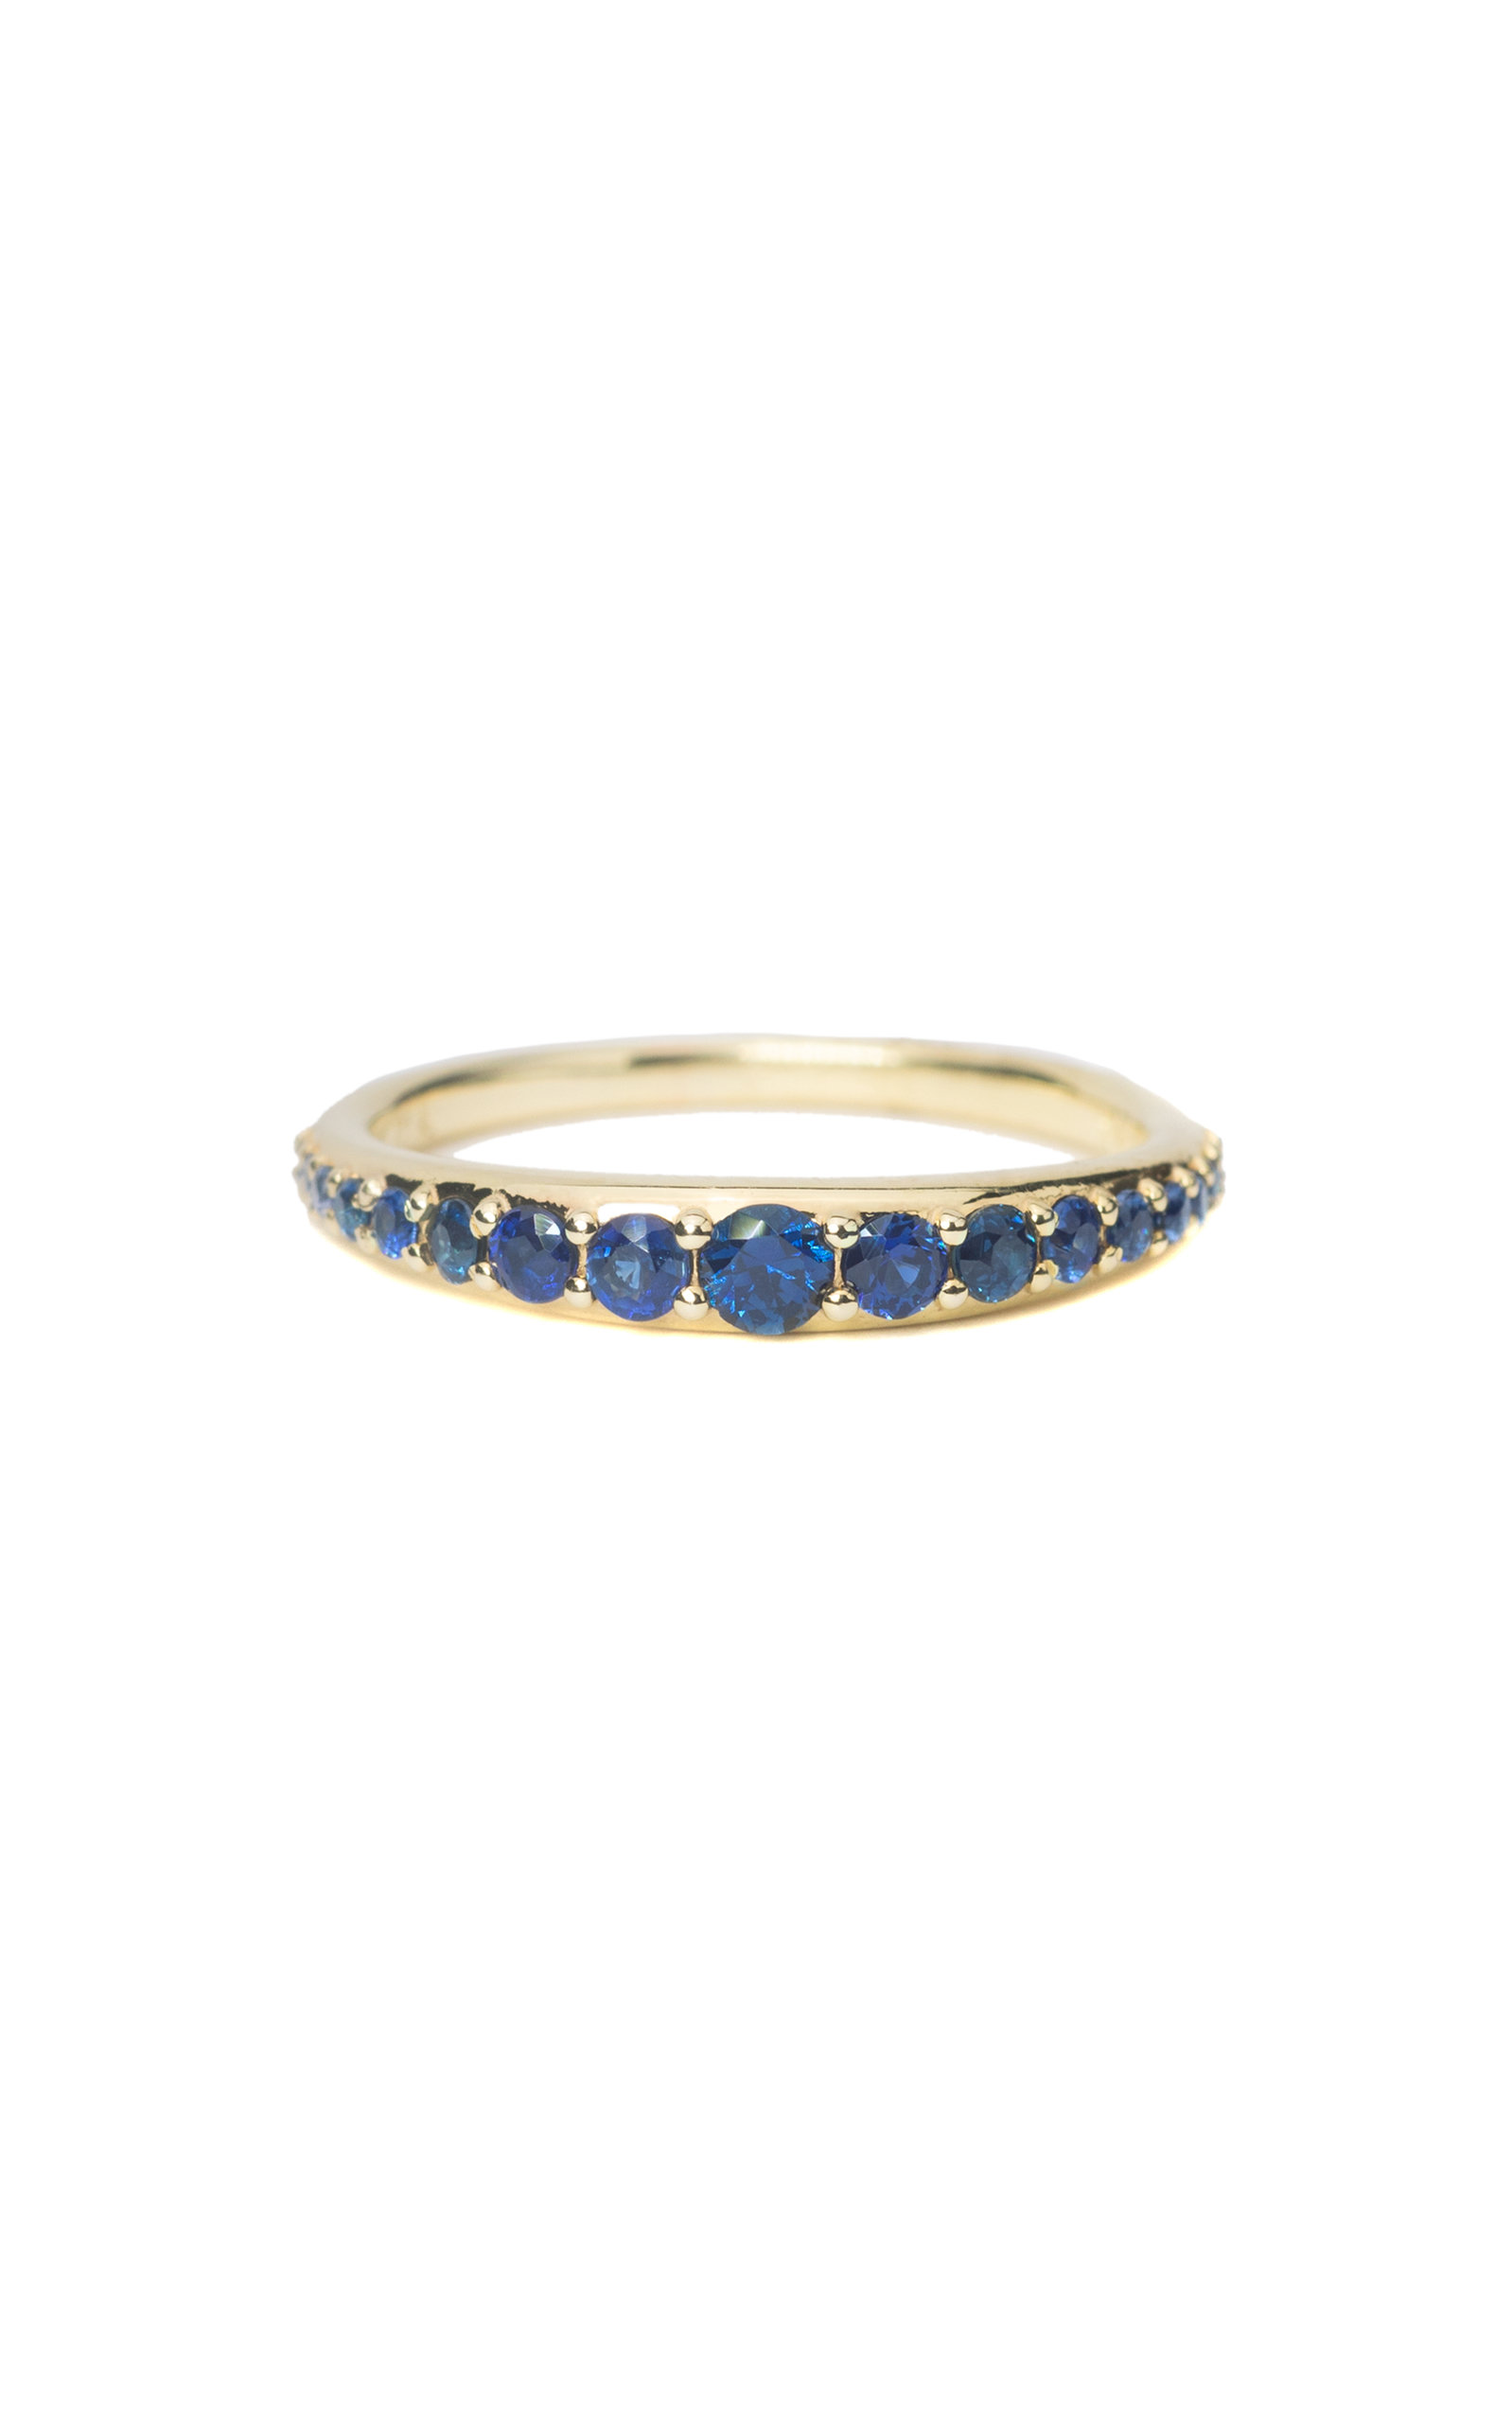 Bali Sapphire 14K Yellow Gold Ring